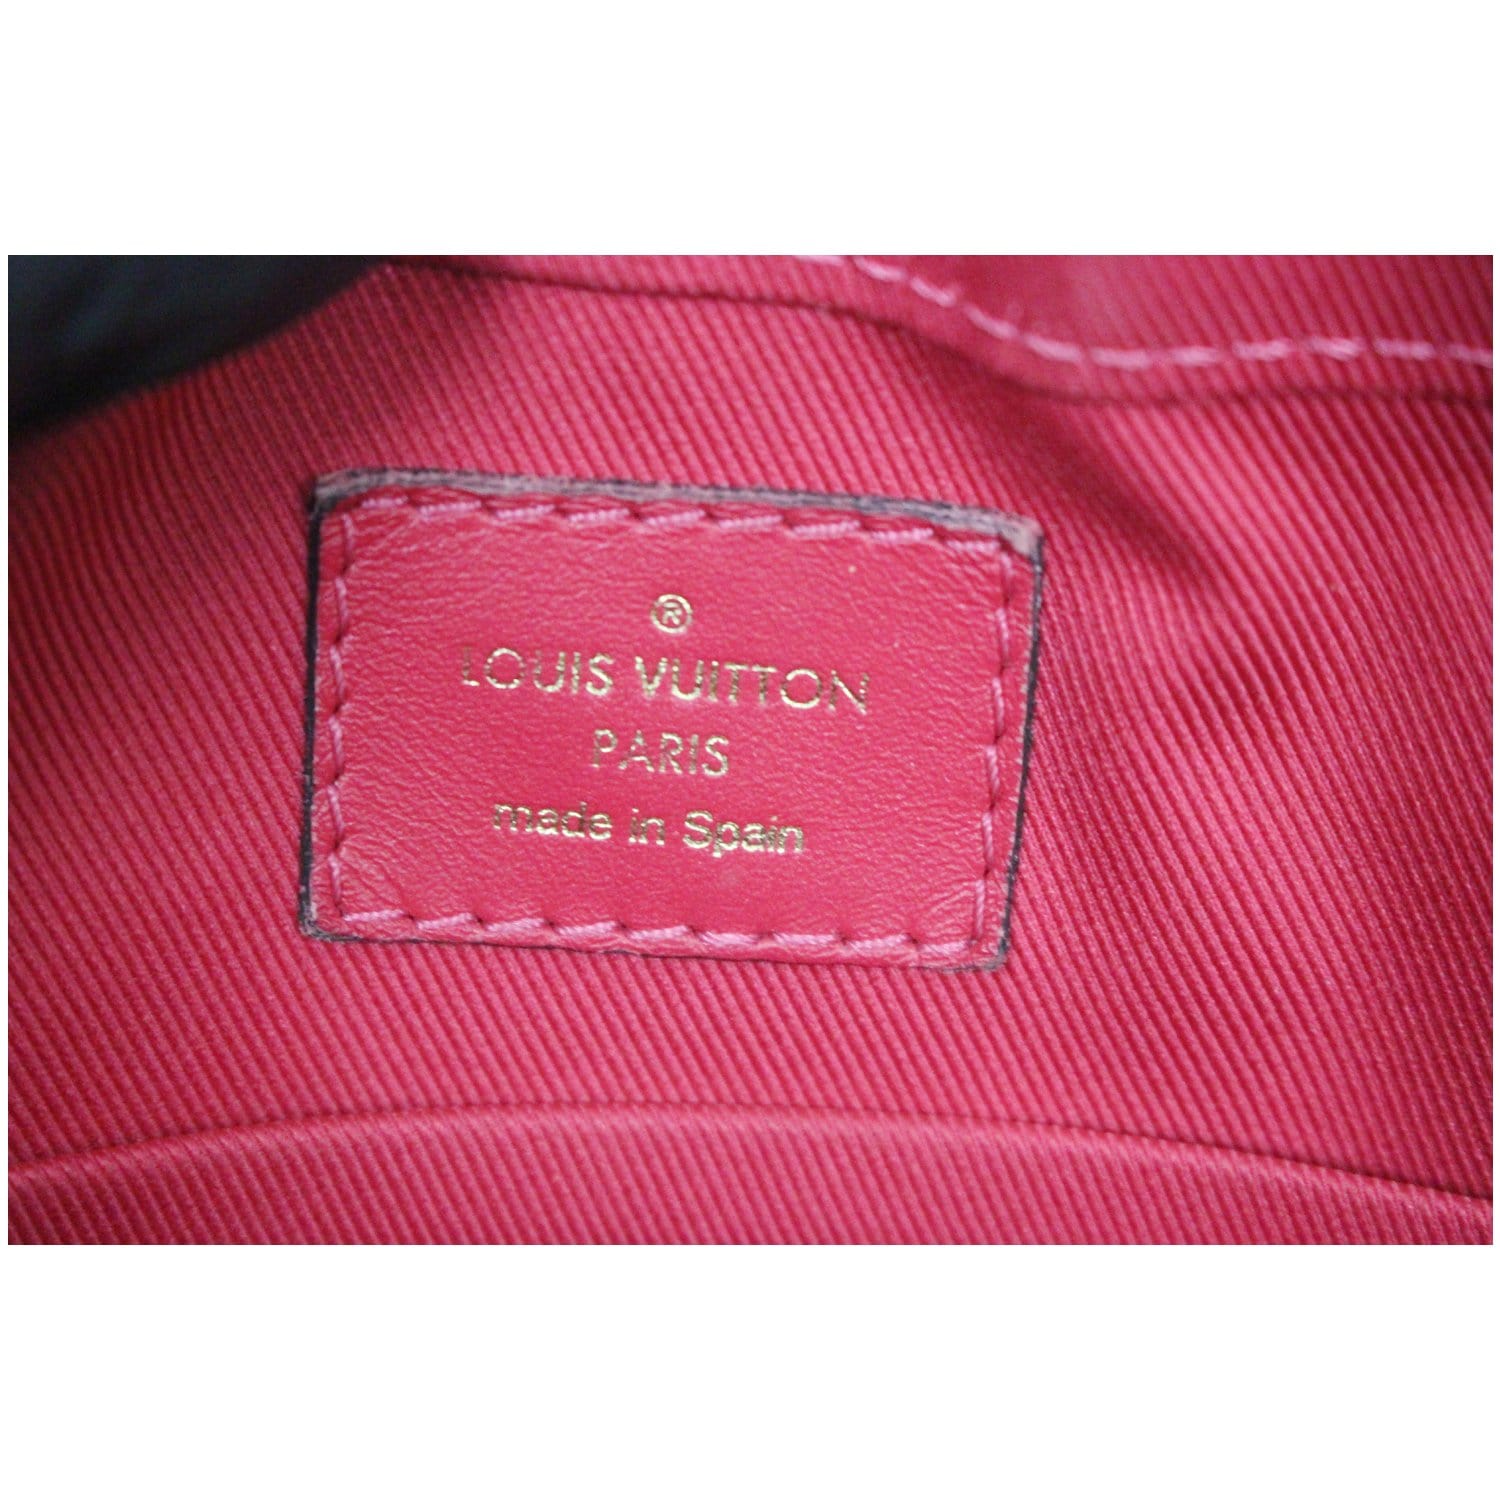 Louis Vuitton Monogram Saintonge Crossbody With Freesia Pink - A